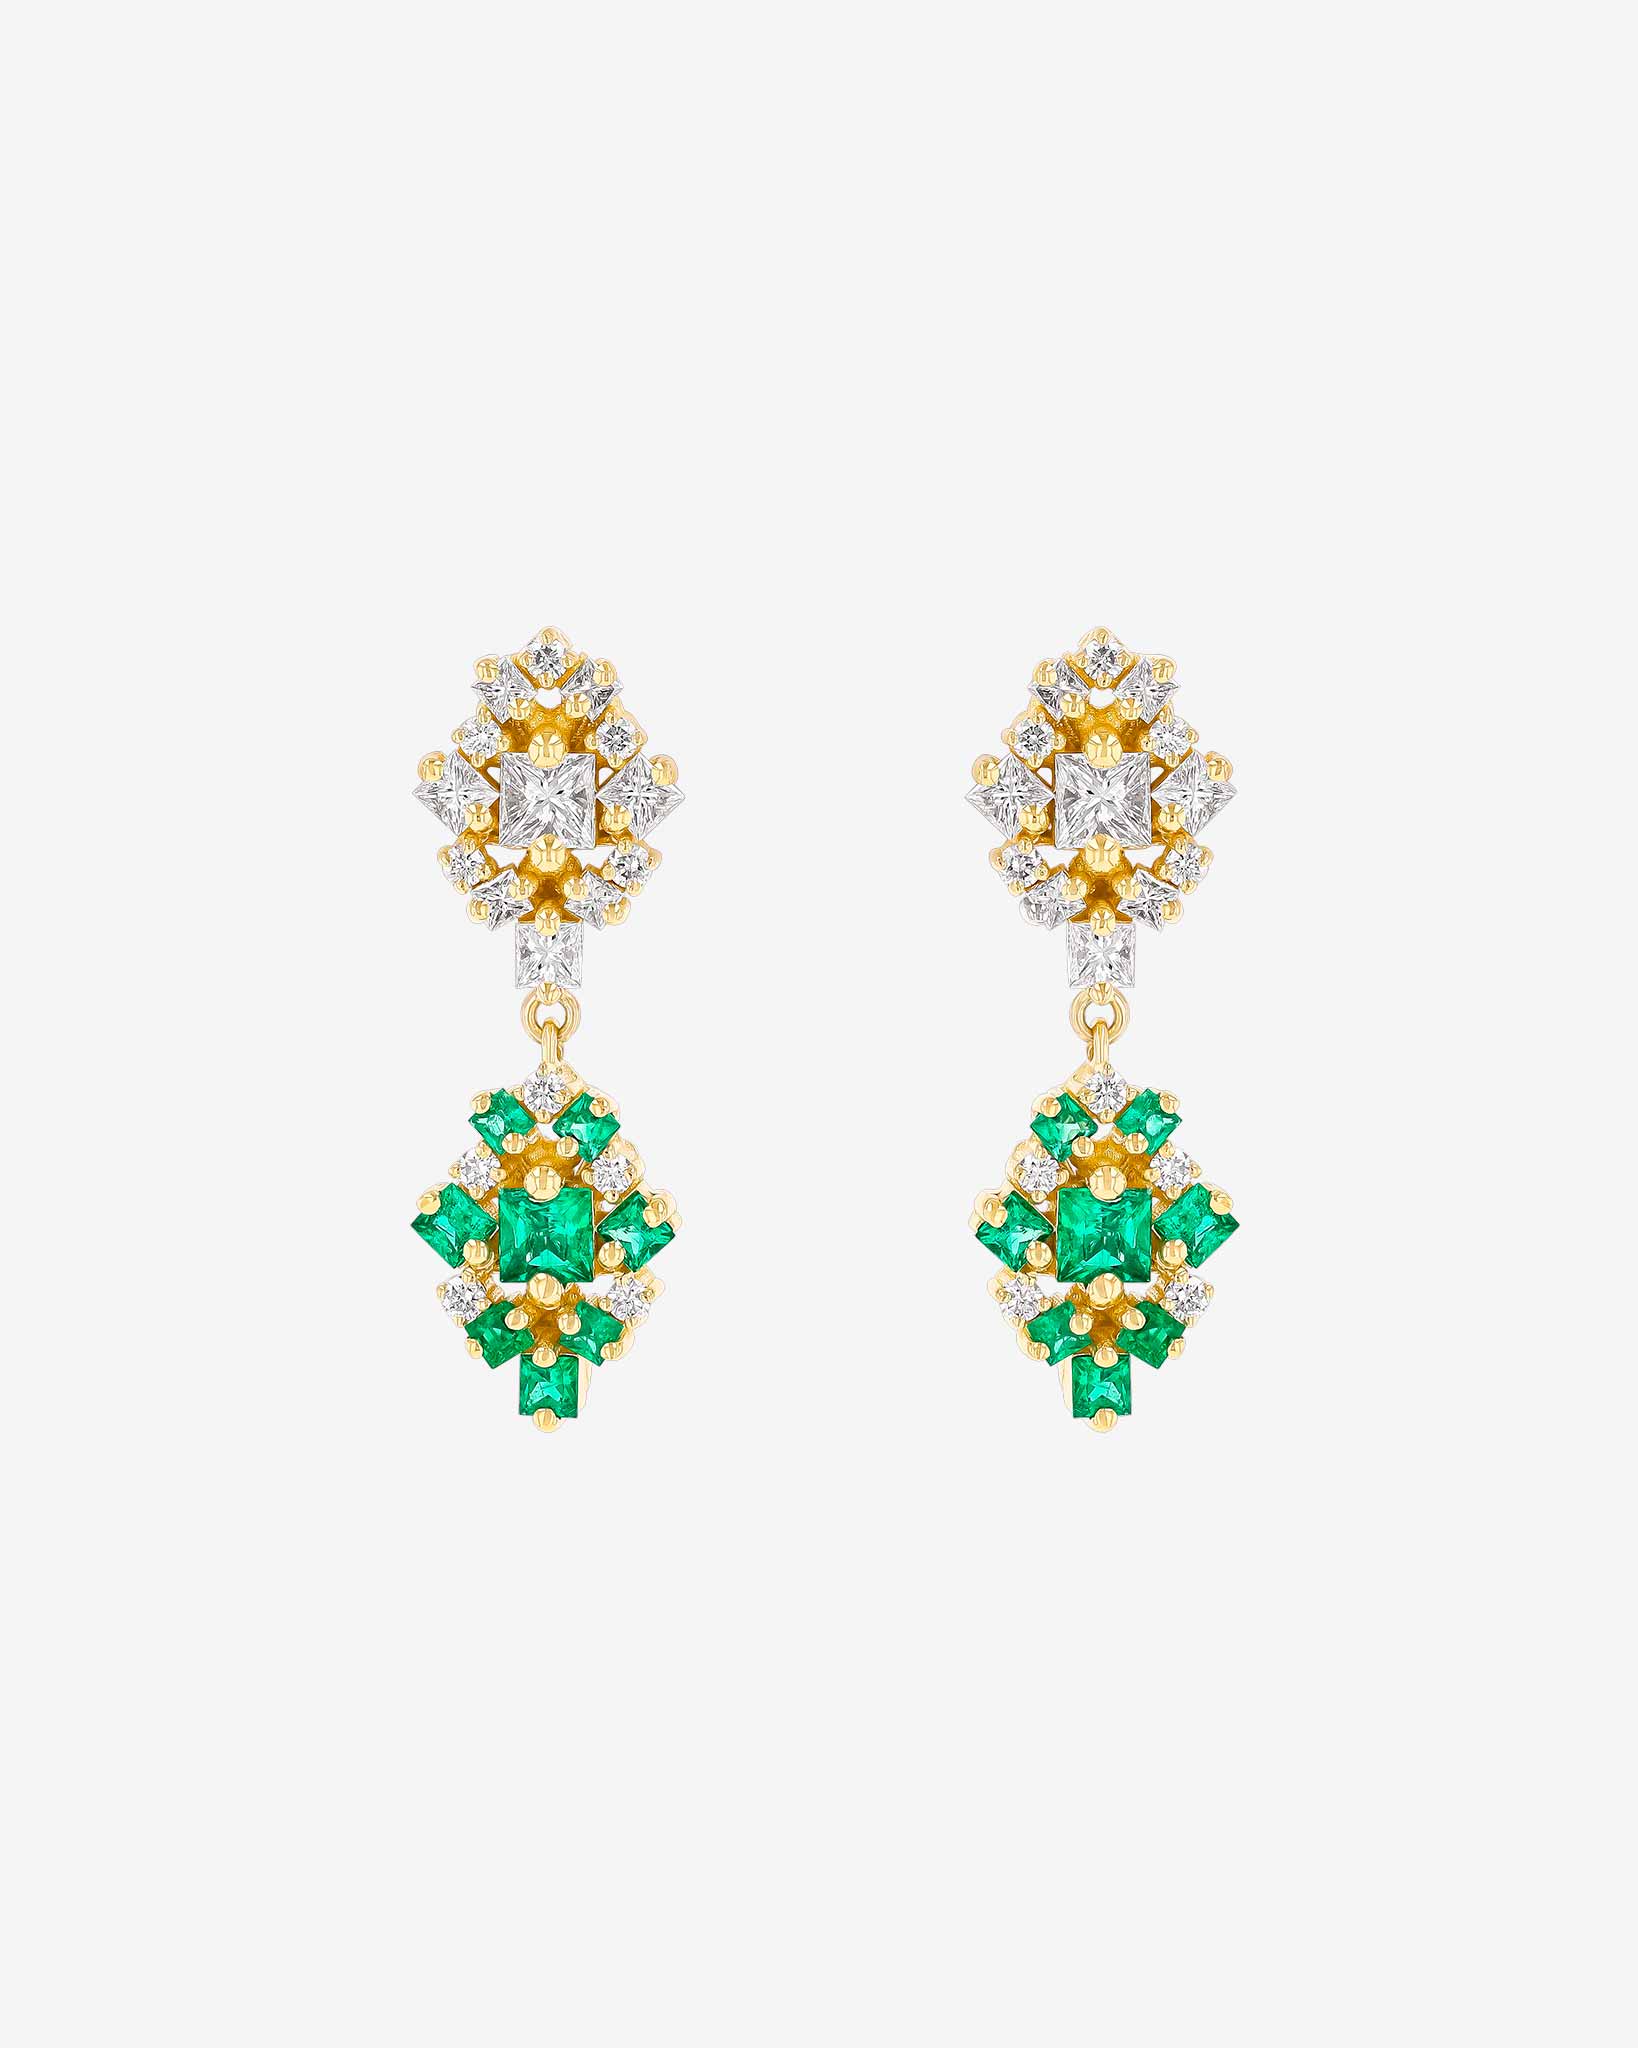 Suzanne Kalan La Fantaisie Double Star Diamond & Emerald Drop Earrings in 18k yellow gold